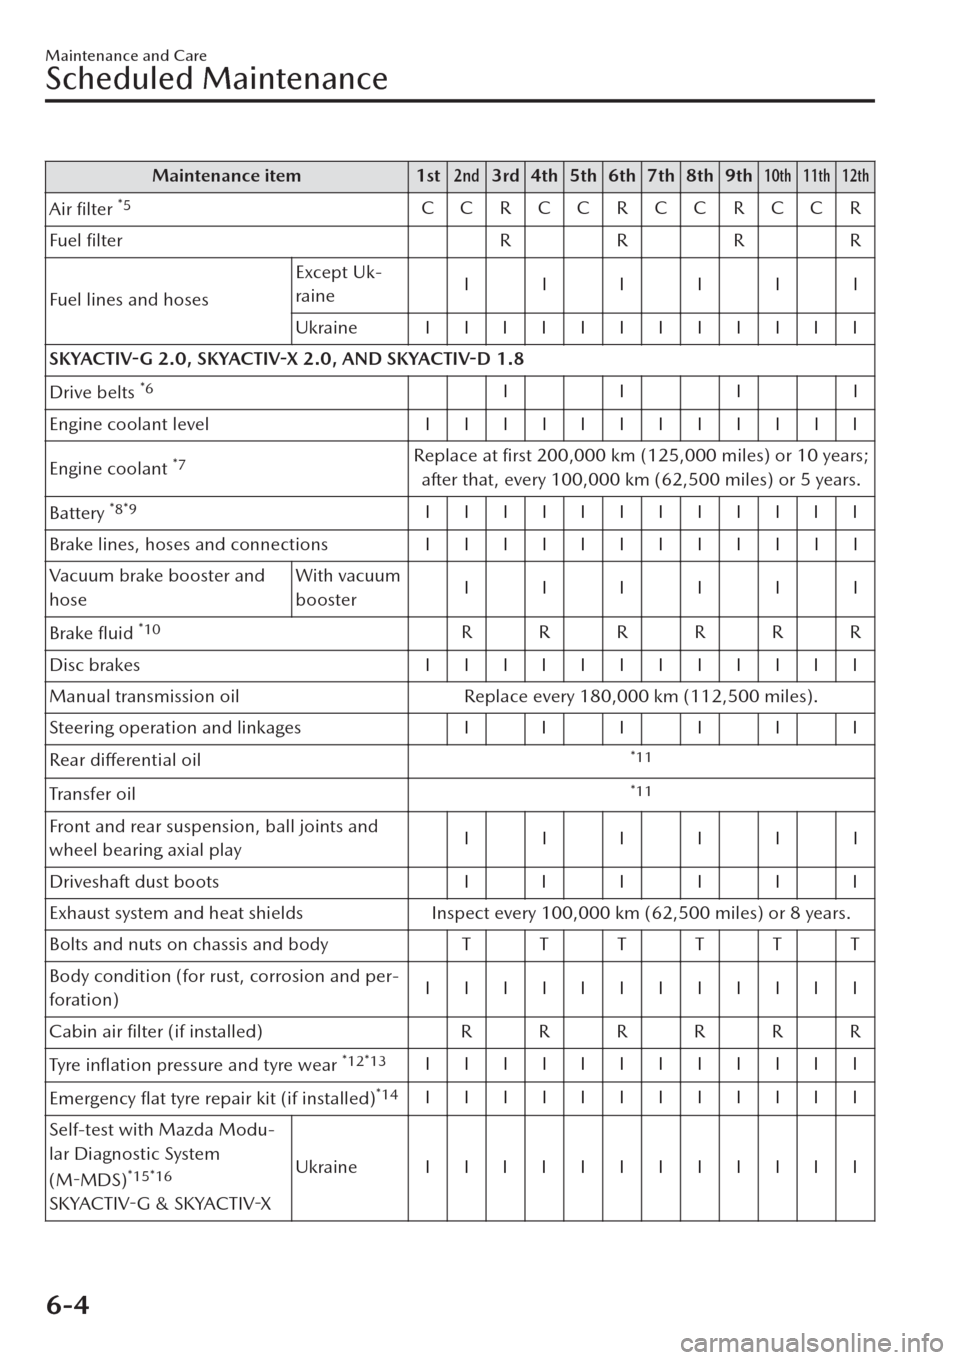 MAZDA MODEL CX-30 2019  Owners Manual (in English) Maintenance item 1st2nd3rd 4th 5th 6th 7th 8th 9th10th 11th 12th
Air ﬁlter *5CCRCCRCCRCCR
Fuel ﬁlter RRRR
Fuel lines and hosesExcept Uk-
raineIIIIII
Ukraine IIIIIIIIIIII
SKYACTIV-G 2.0, SKYACTIV-X